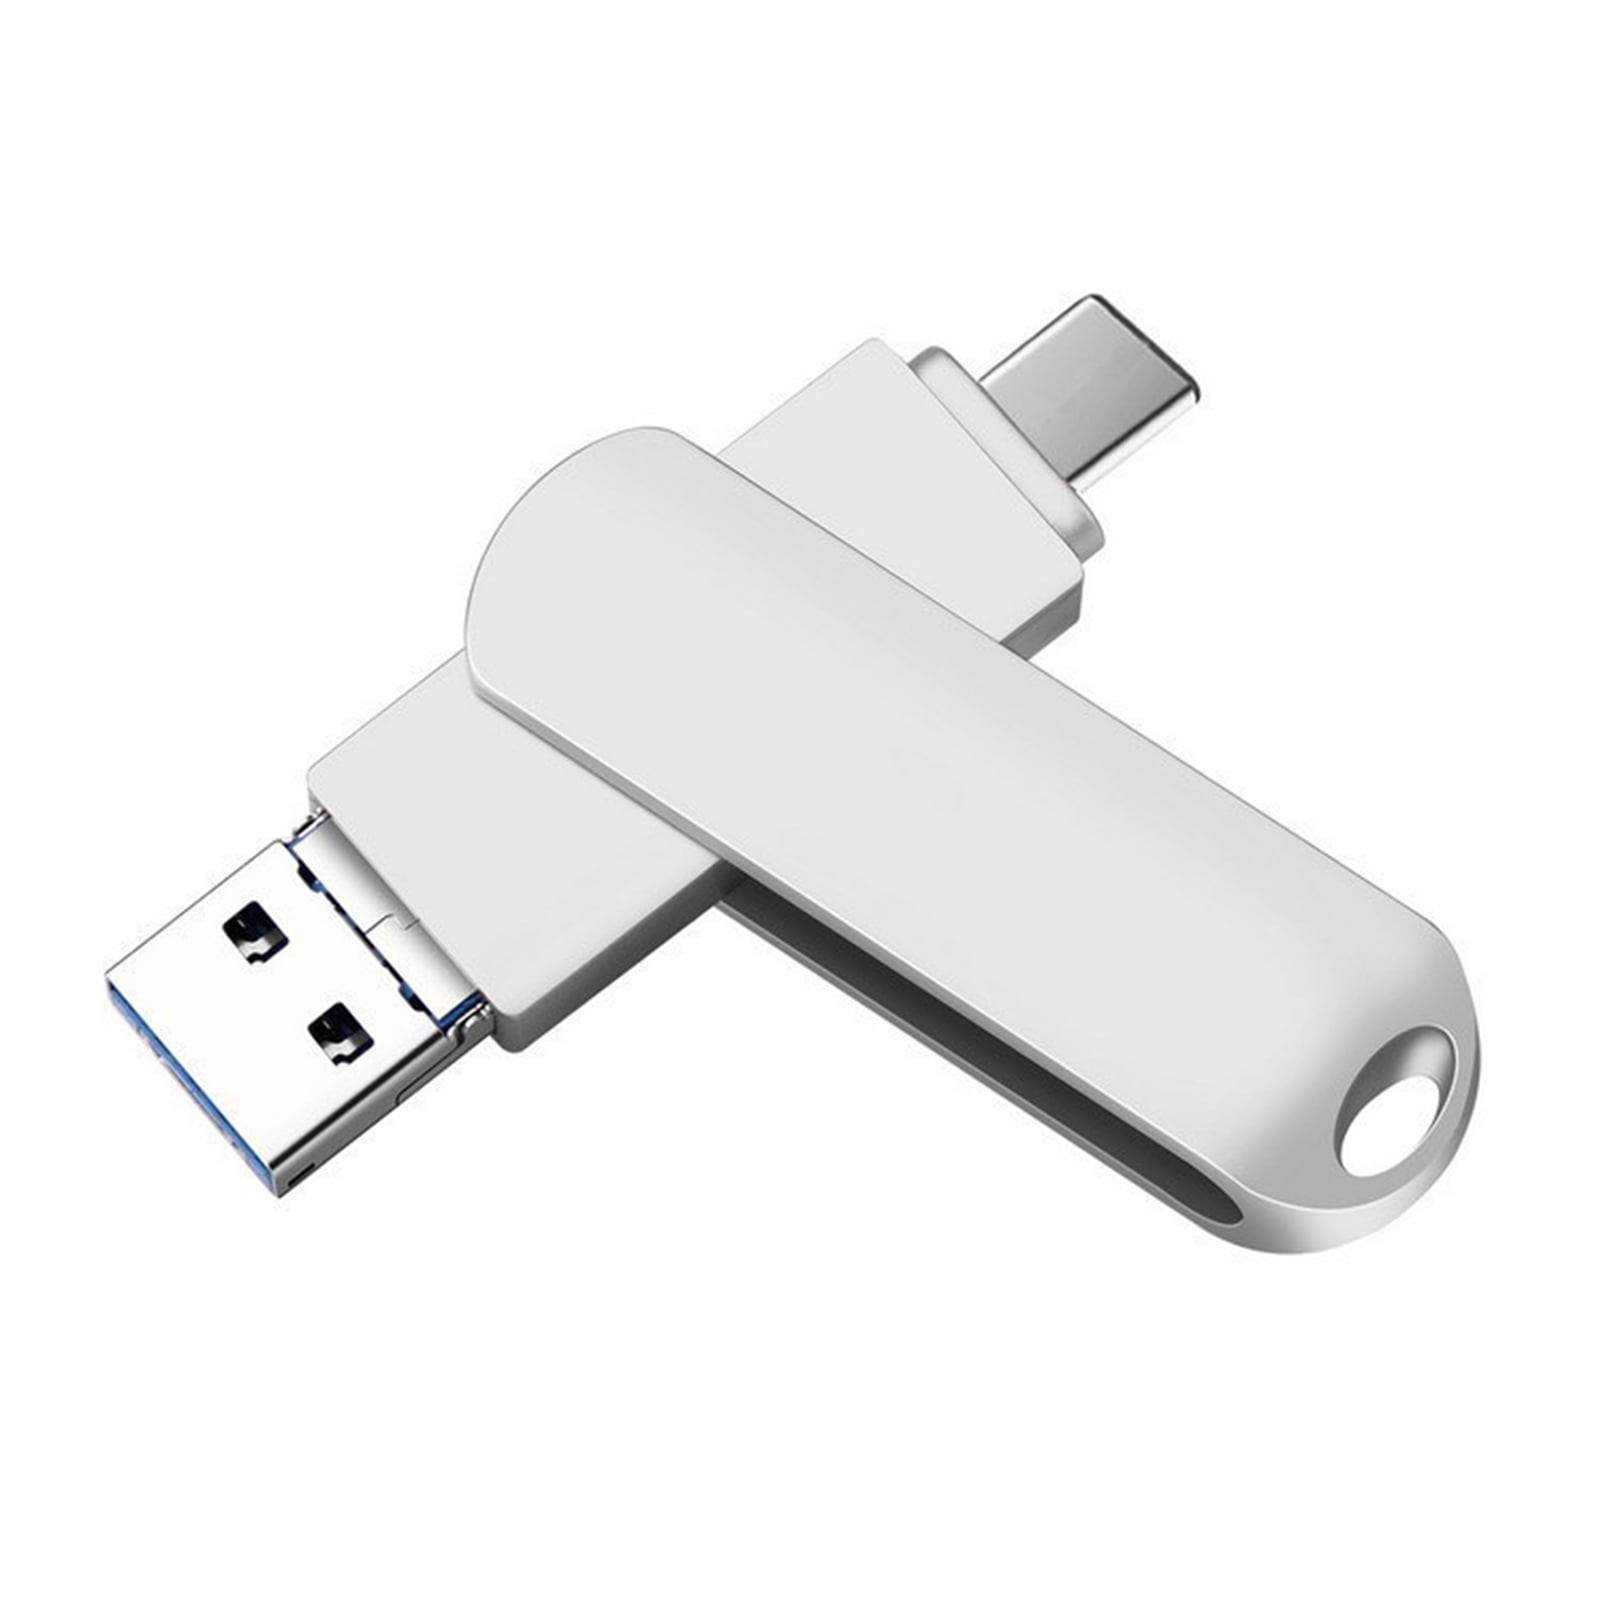 Tussendoortje bedenken zelfmoord FaLX USB Flash Memory Stick Quick Transmission Plug Play Large Memory  USB3.0 Type-C USB 8-pin Flash Drive for Speaker - Walmart.com